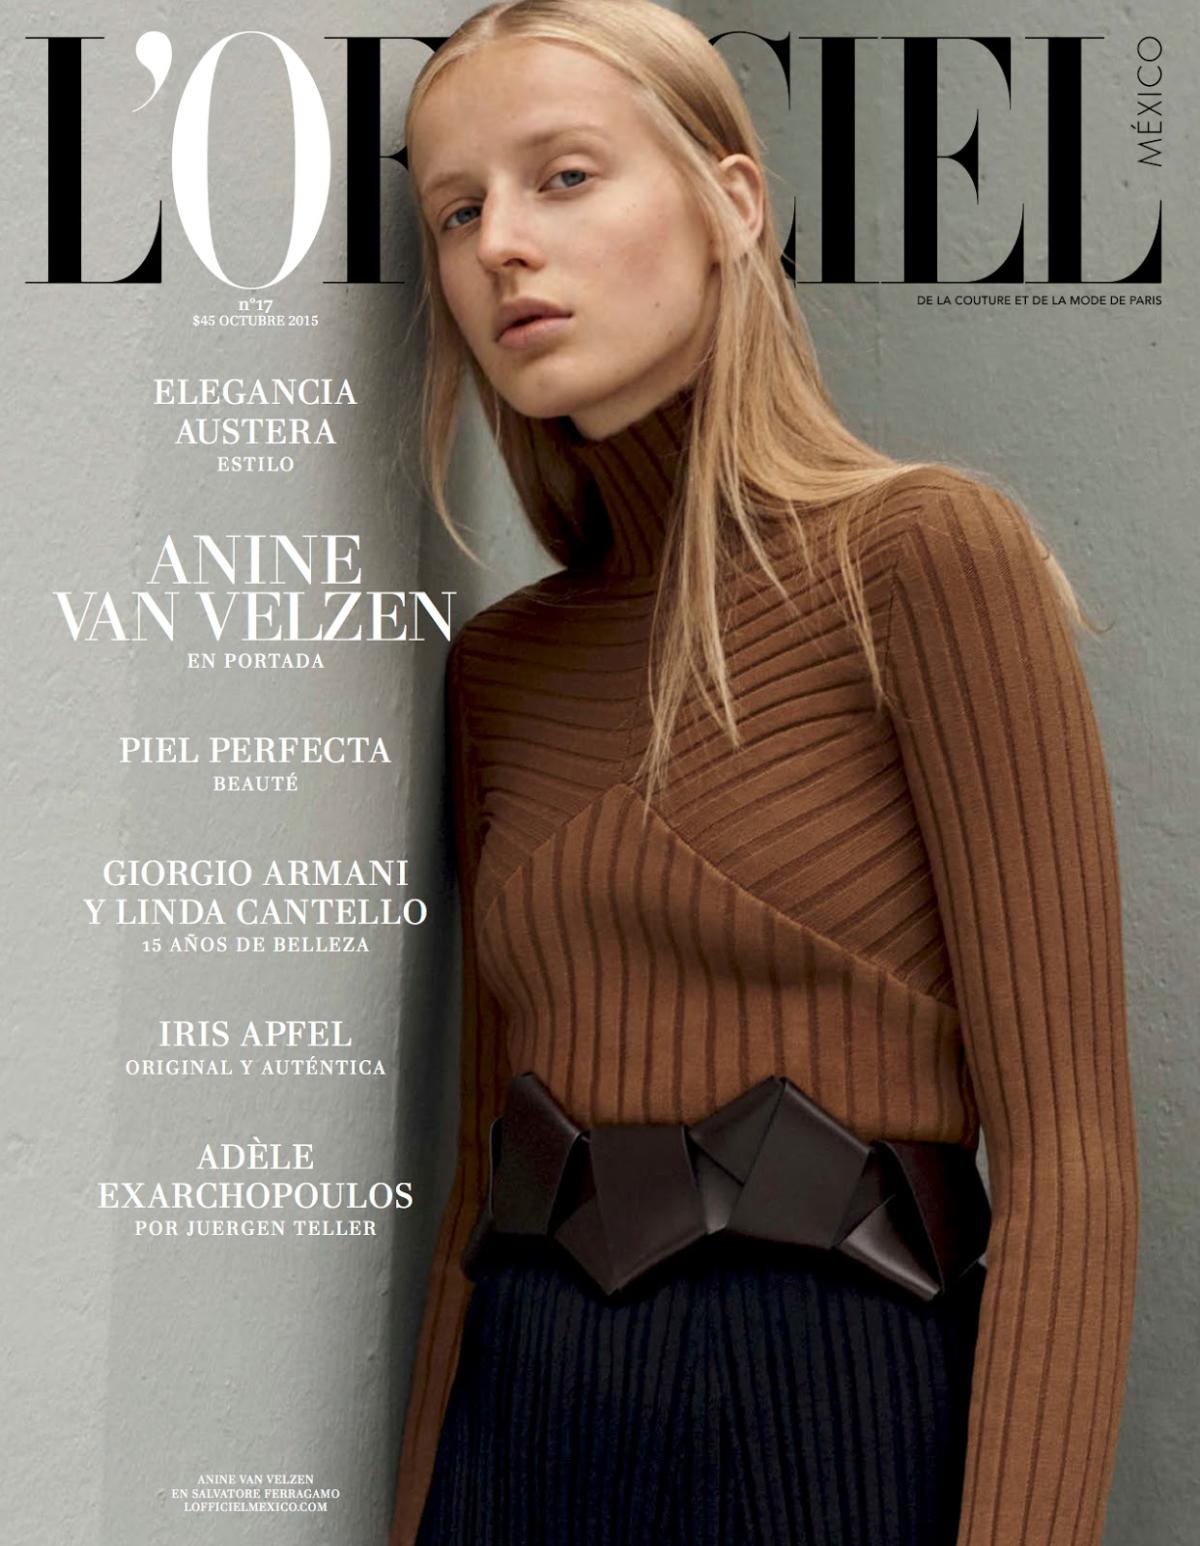 Anine van Velzen Covers L'Officiel Mexico October 2015